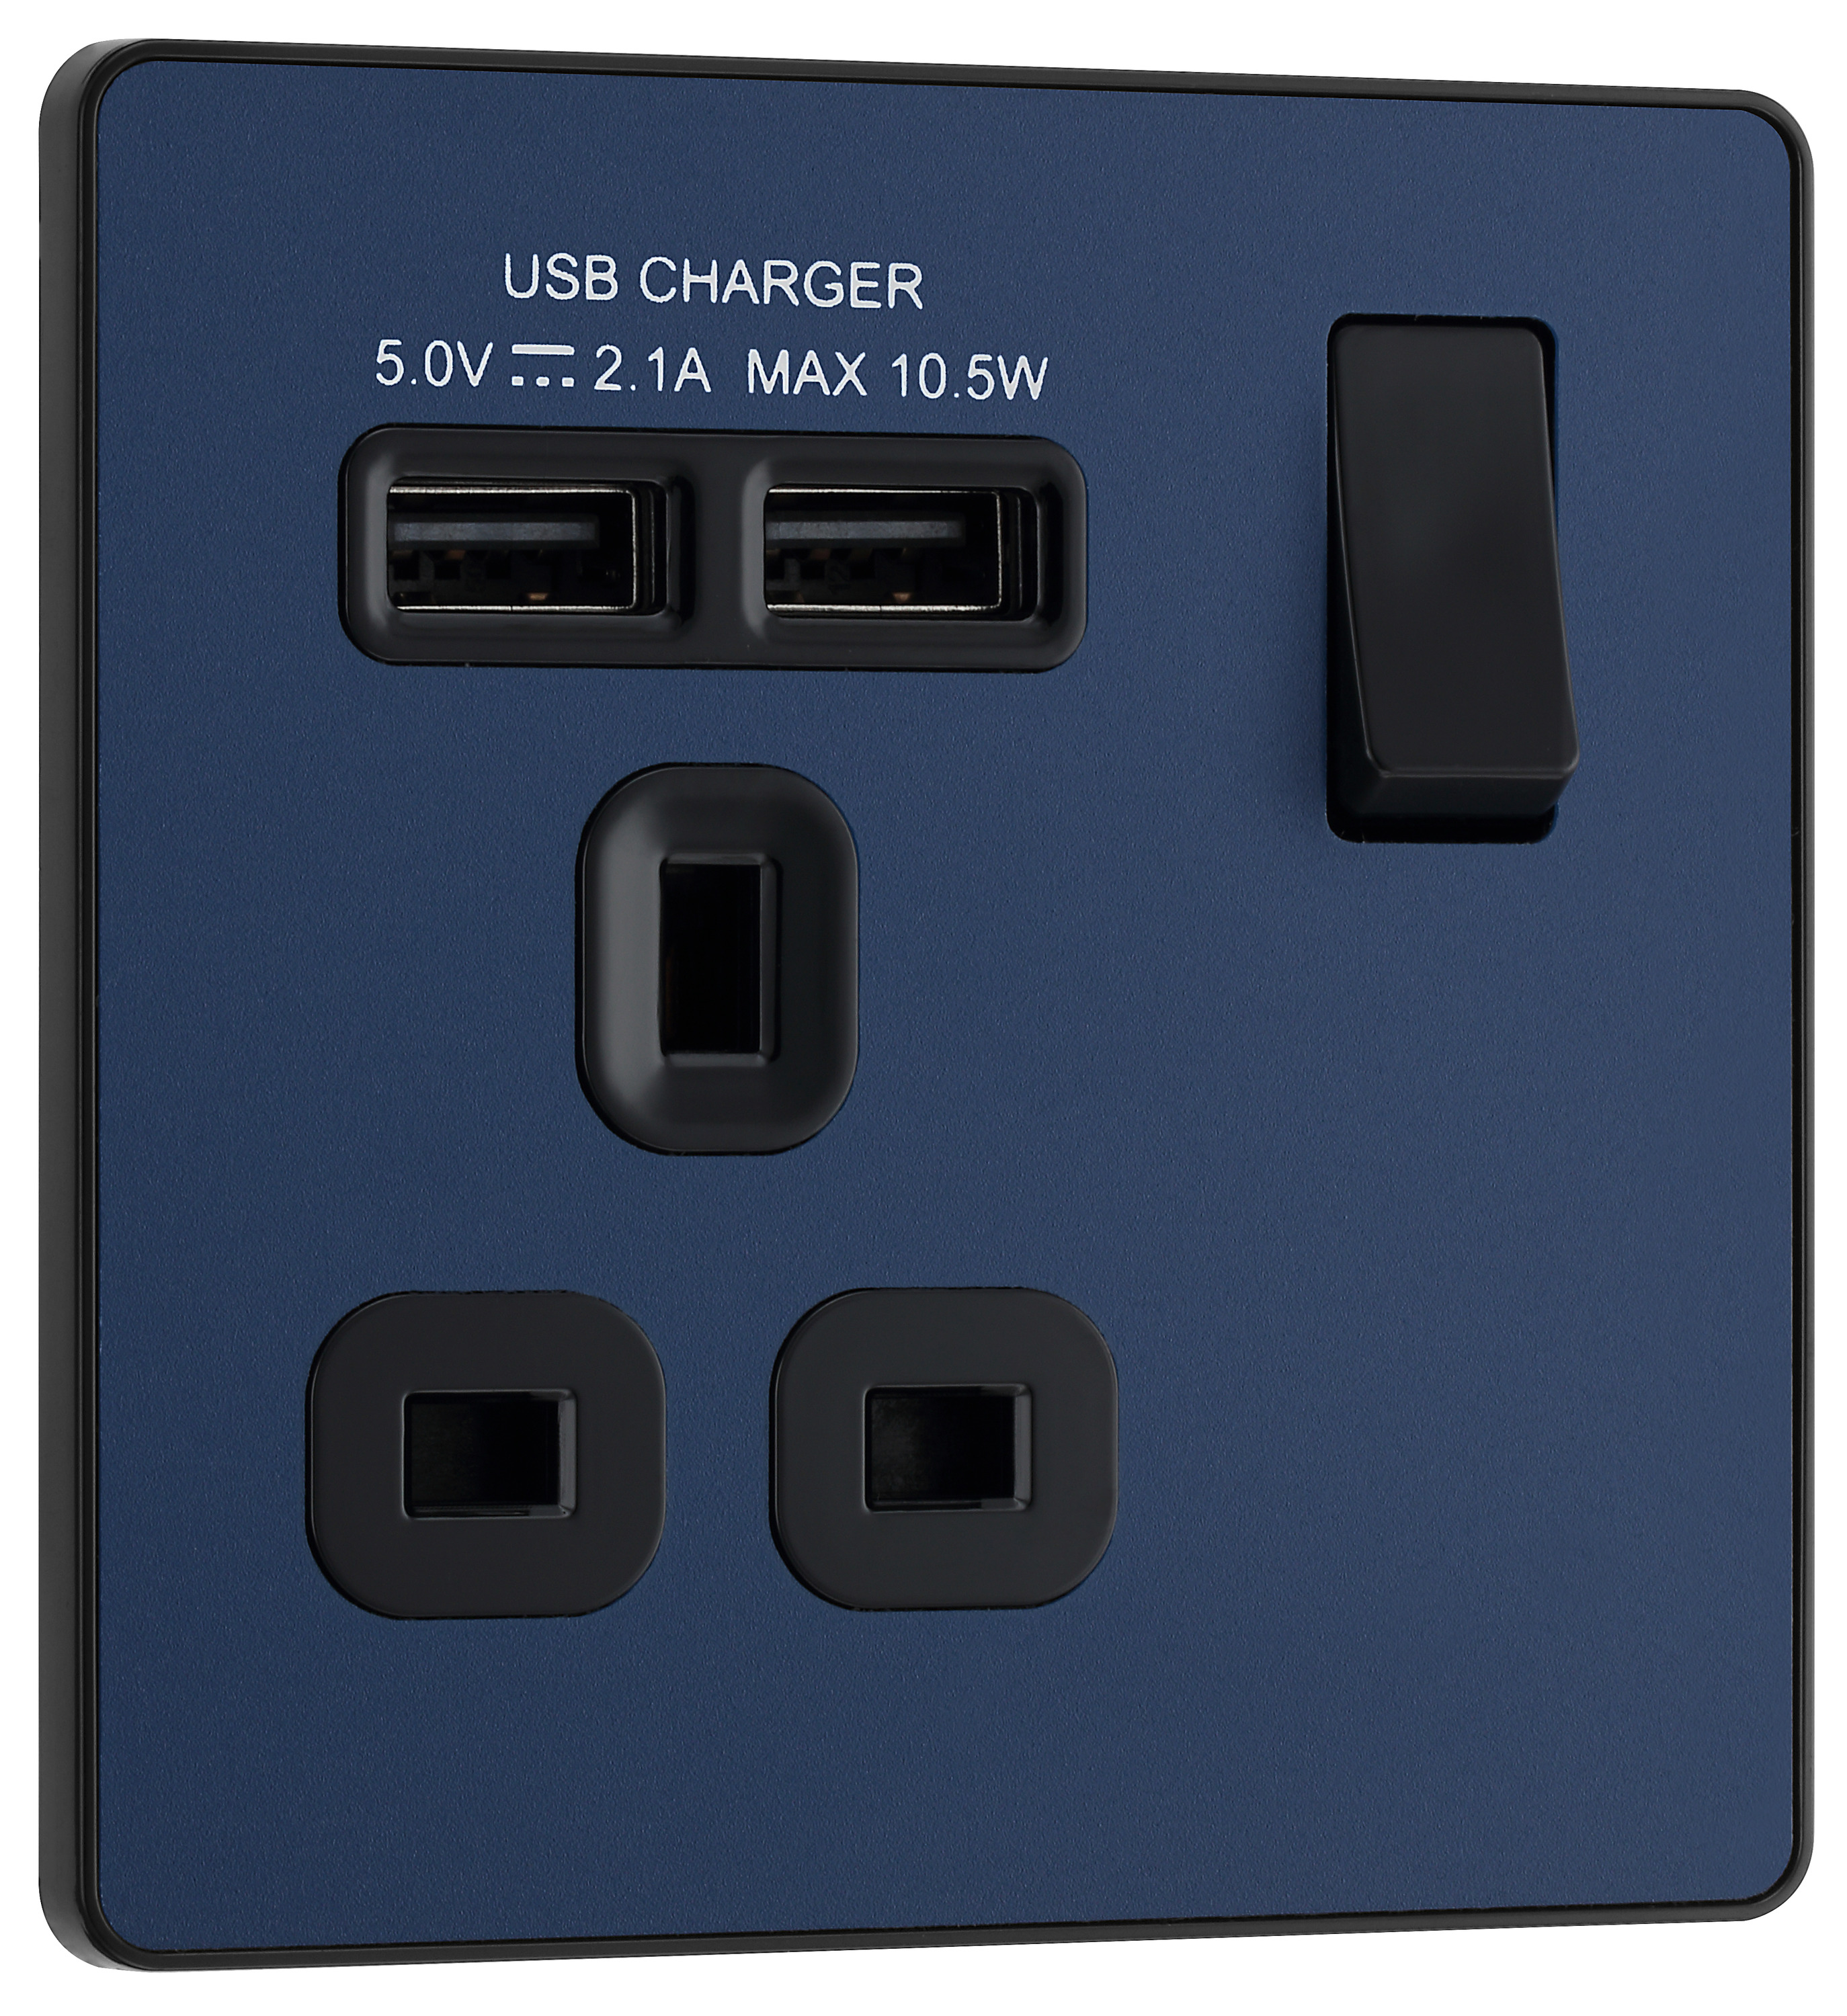 BG Evolve Matt Blue 13A Single Switched Power Socket & 2 x USB (2.1A)